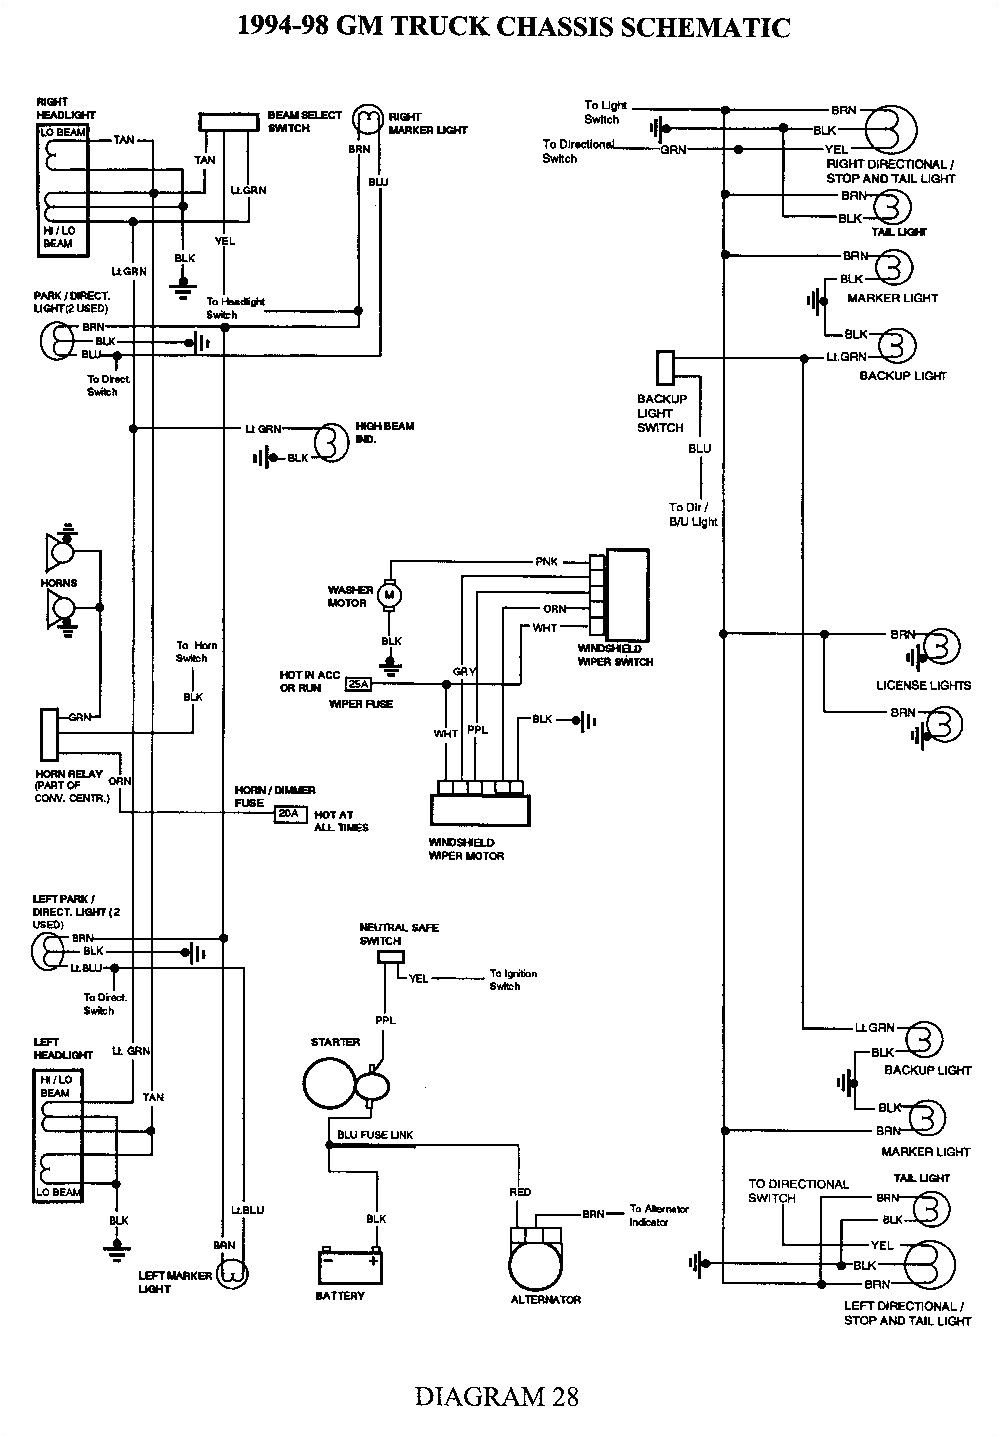 wiring diagram for 1950 gmc wiring diagram operations chevy truck trailer wiring diagram chevy truck wiring 1950 chevy truck